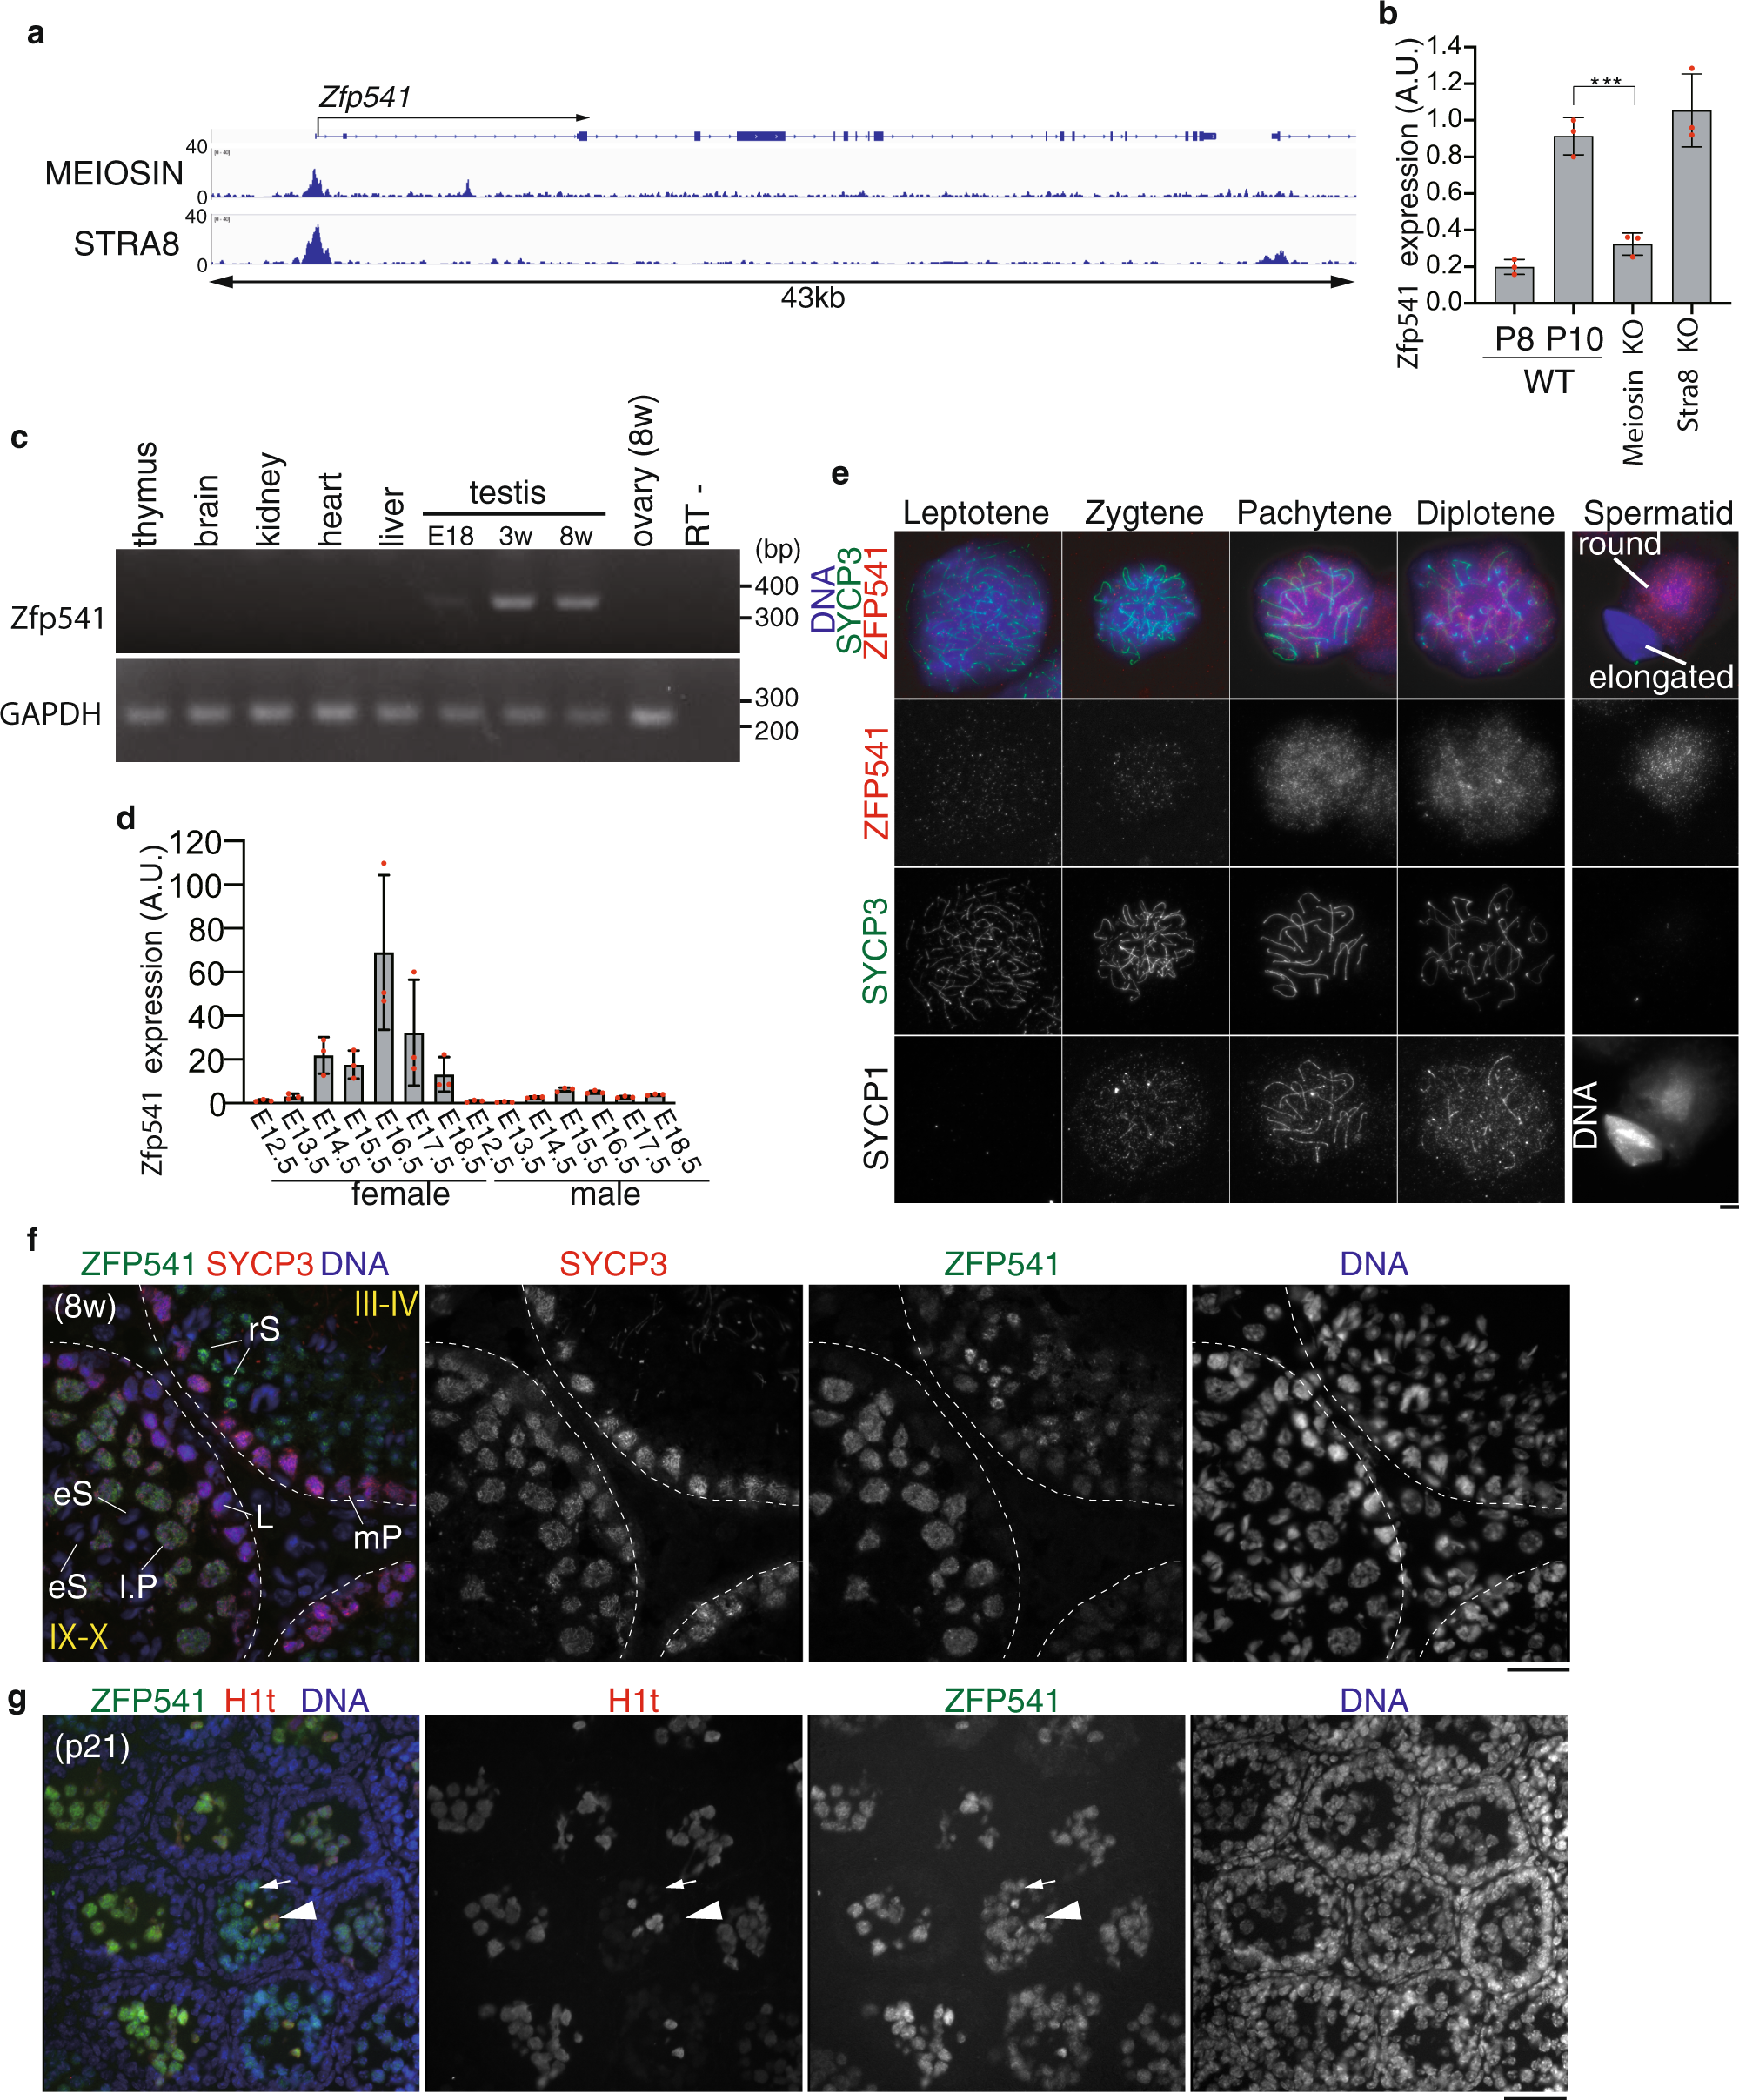 Meiosis-specific ZFP541 repressor complex promotes developmental progression of meiotic prophase towards completion during mouse spermatogenesis Nature Communications image